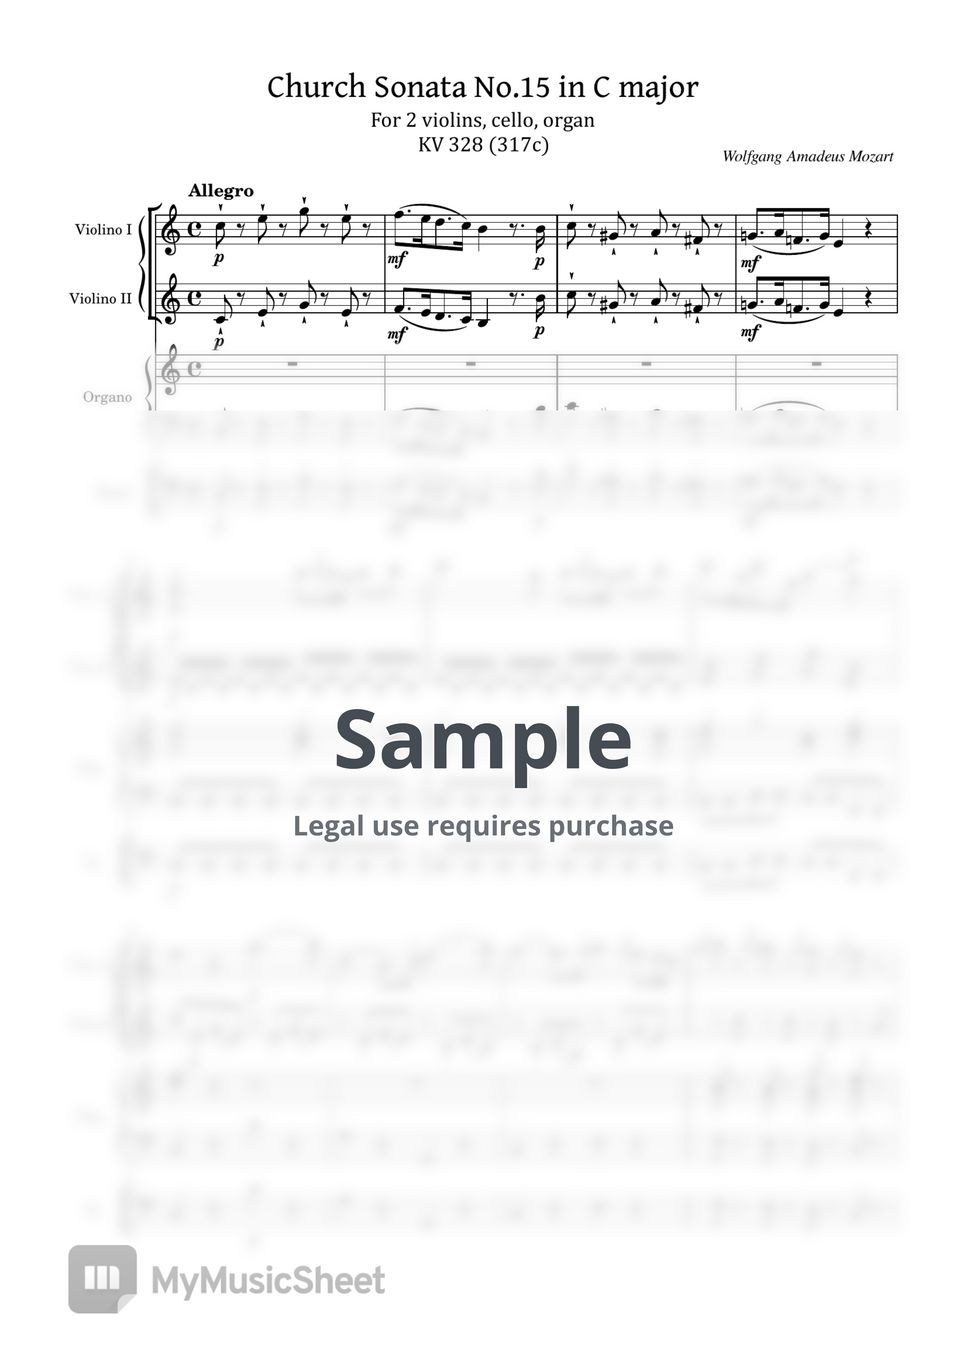 Wolfgang Amadeus Mozart - Church Sonata No.15 in C major, K.328/317c (For 2 violins, cello, organ Original) by poon